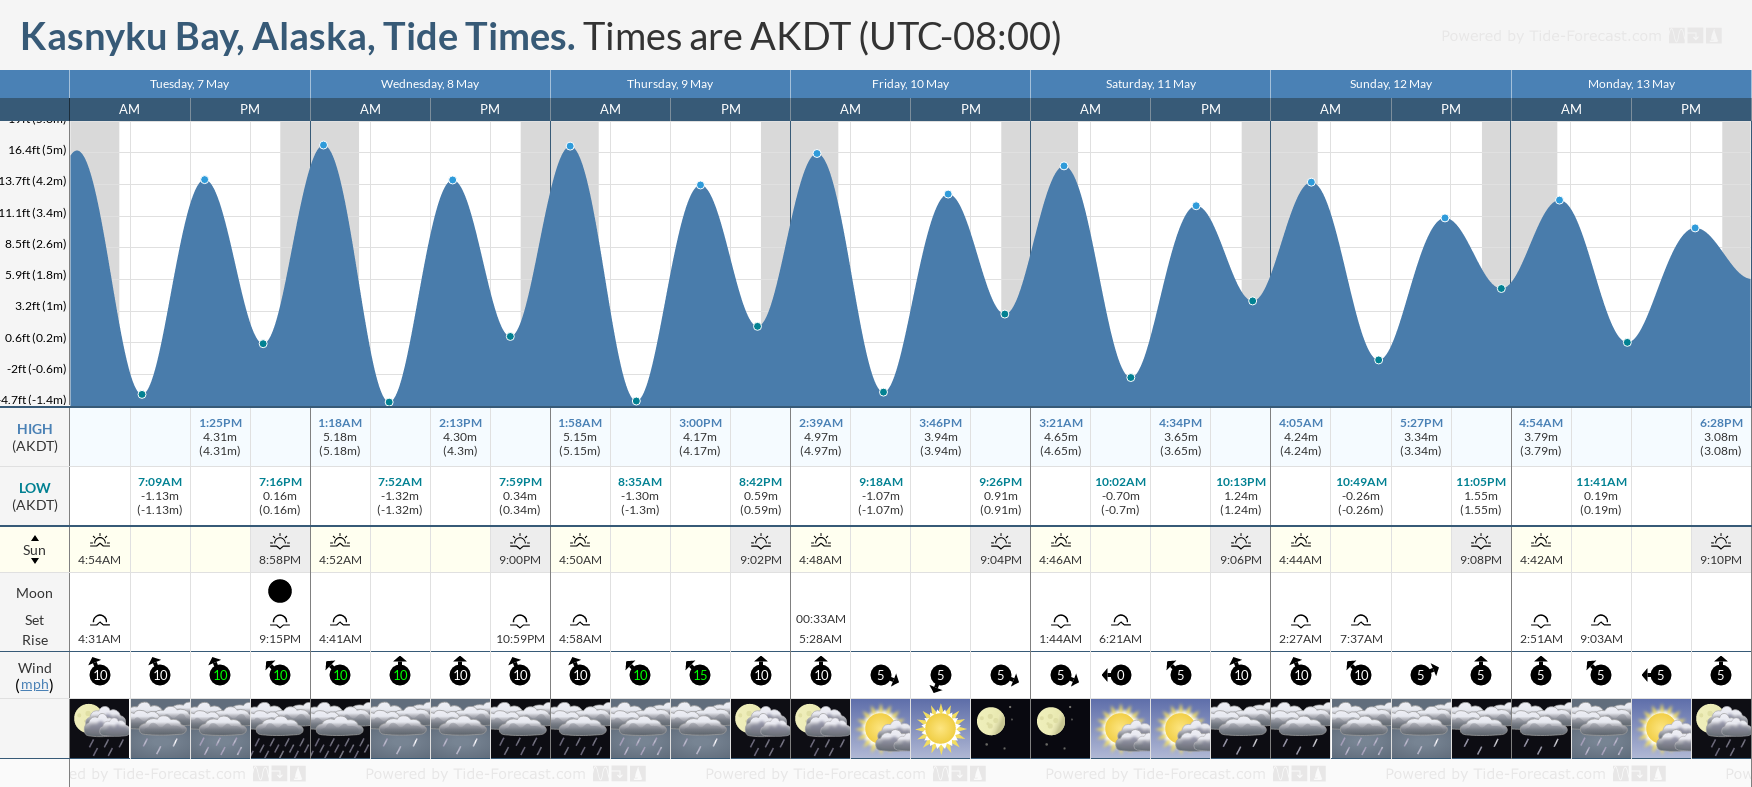 Kasnyku Bay, Alaska Tide Chart including high and low tide tide times for the next 7 days